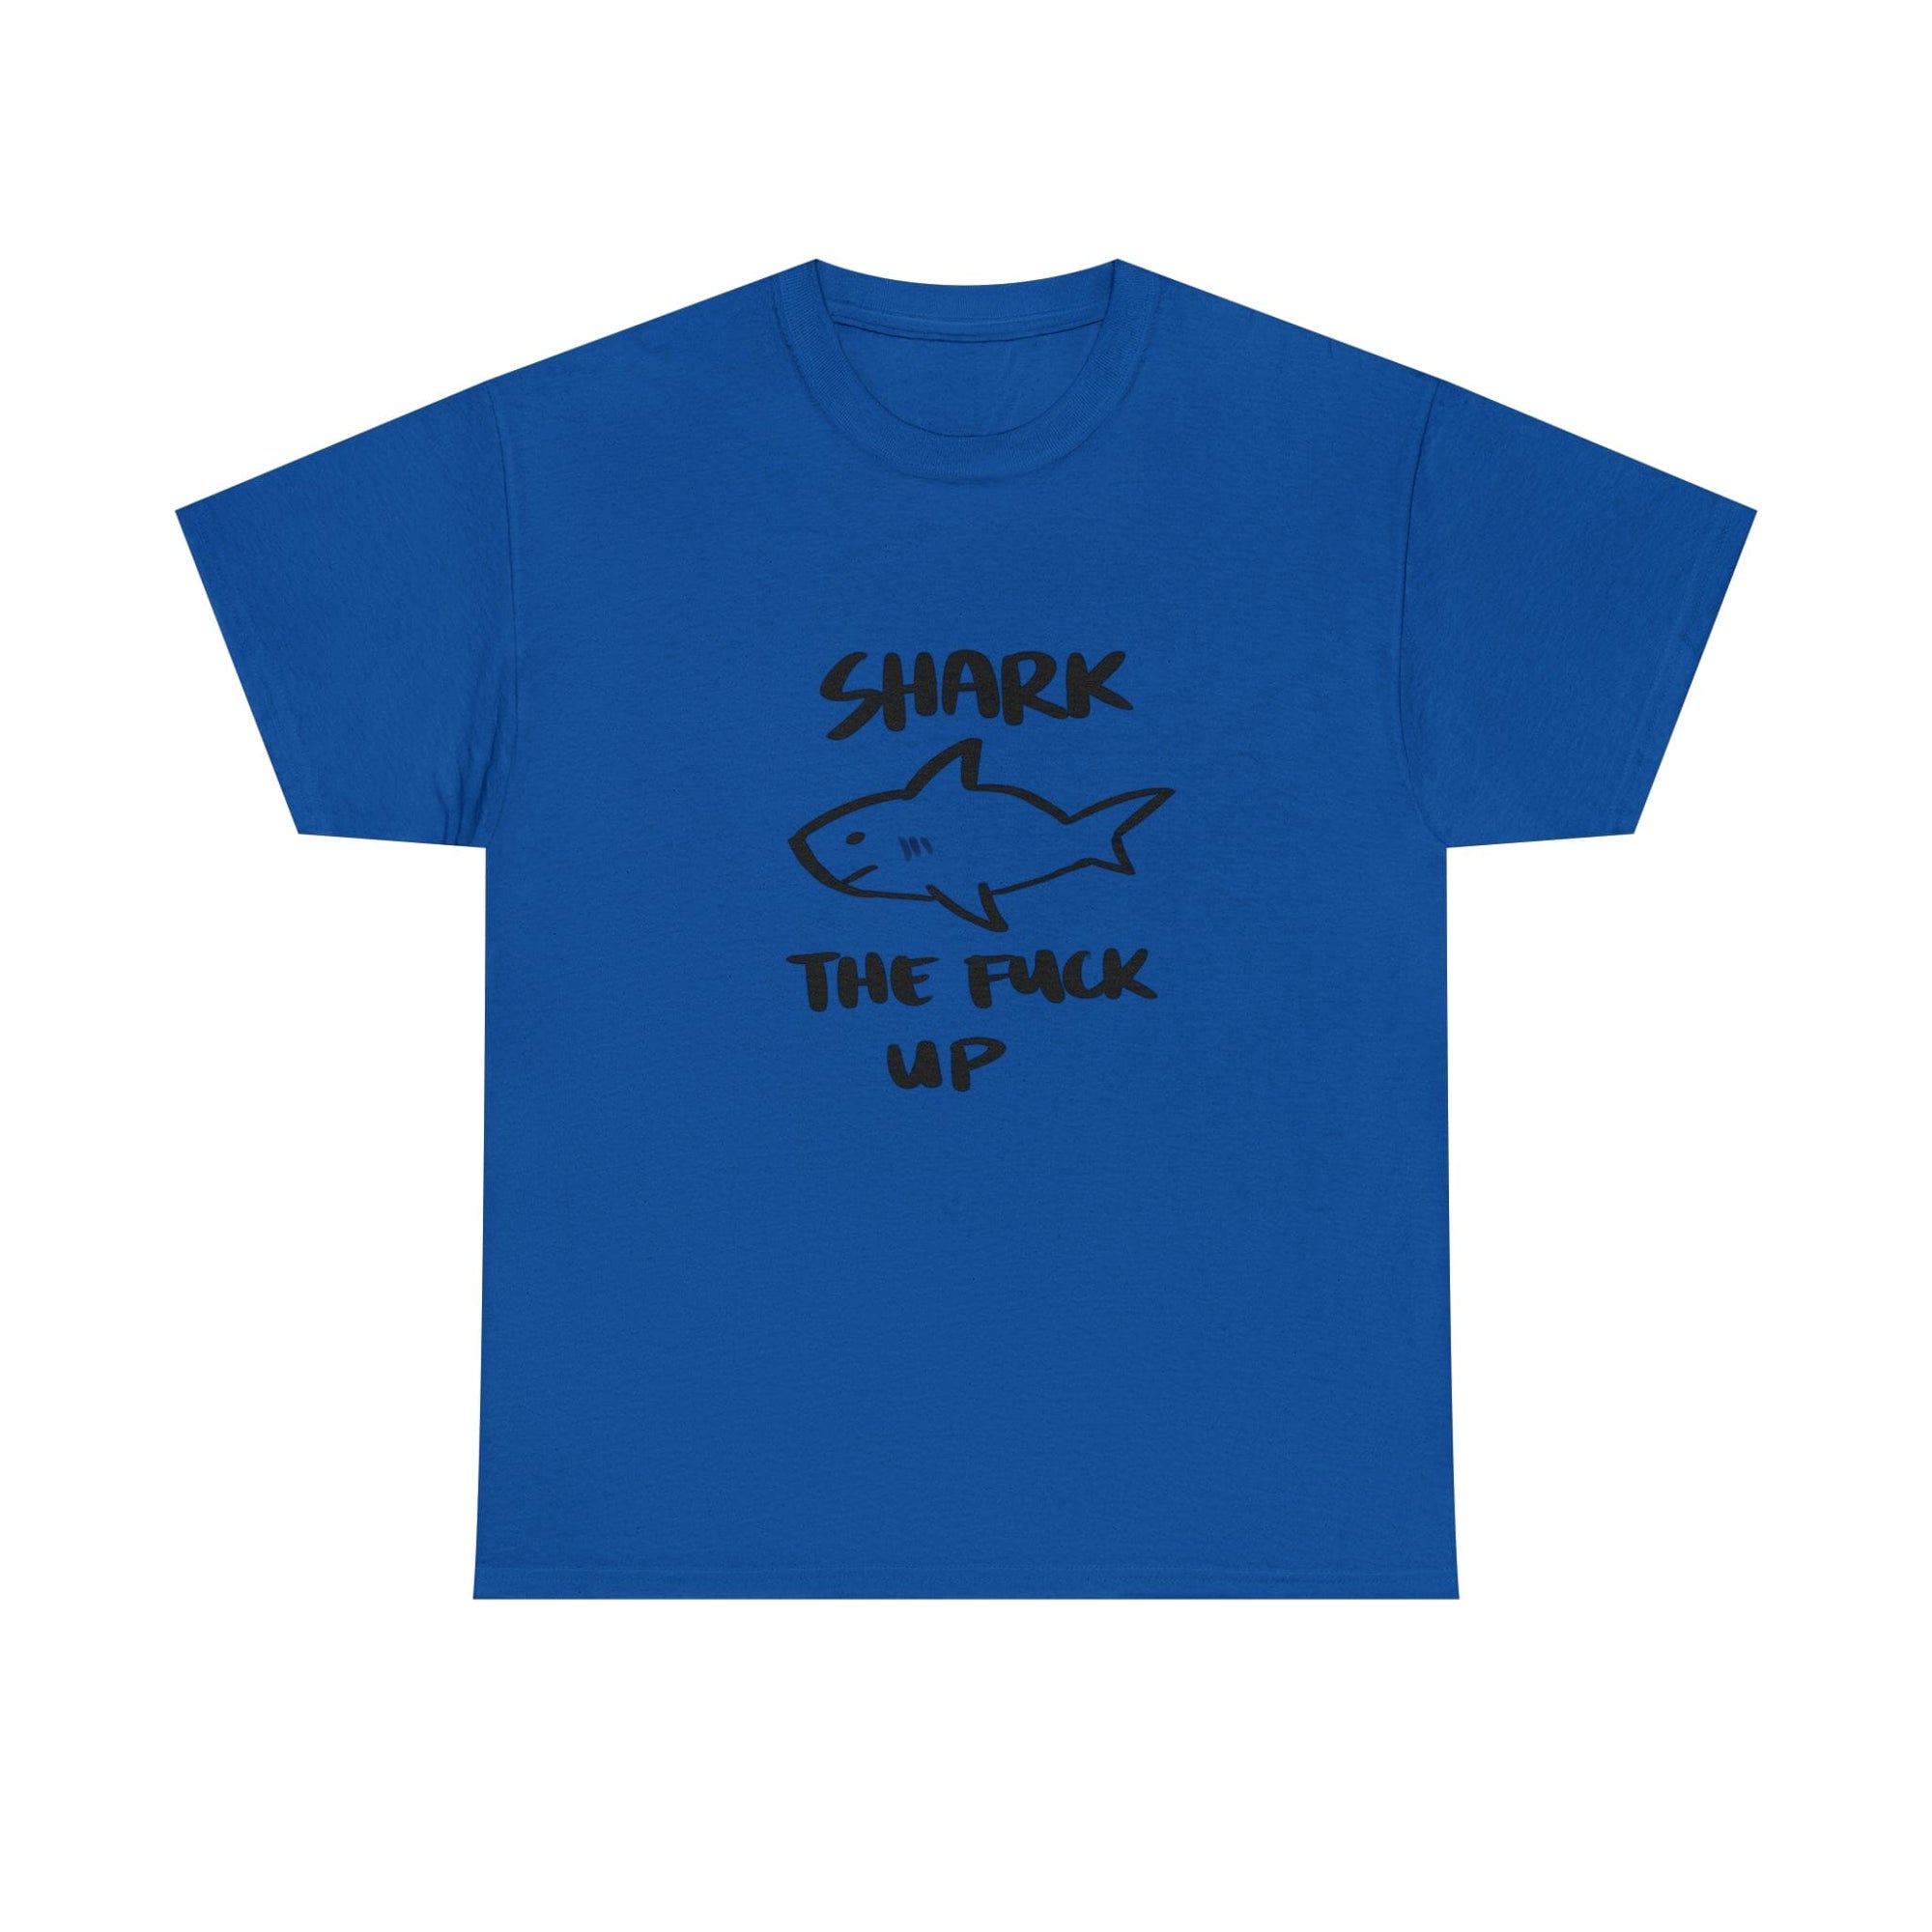 Shark up - T-Shirt T-Shirt Ooka Royal Blue S 